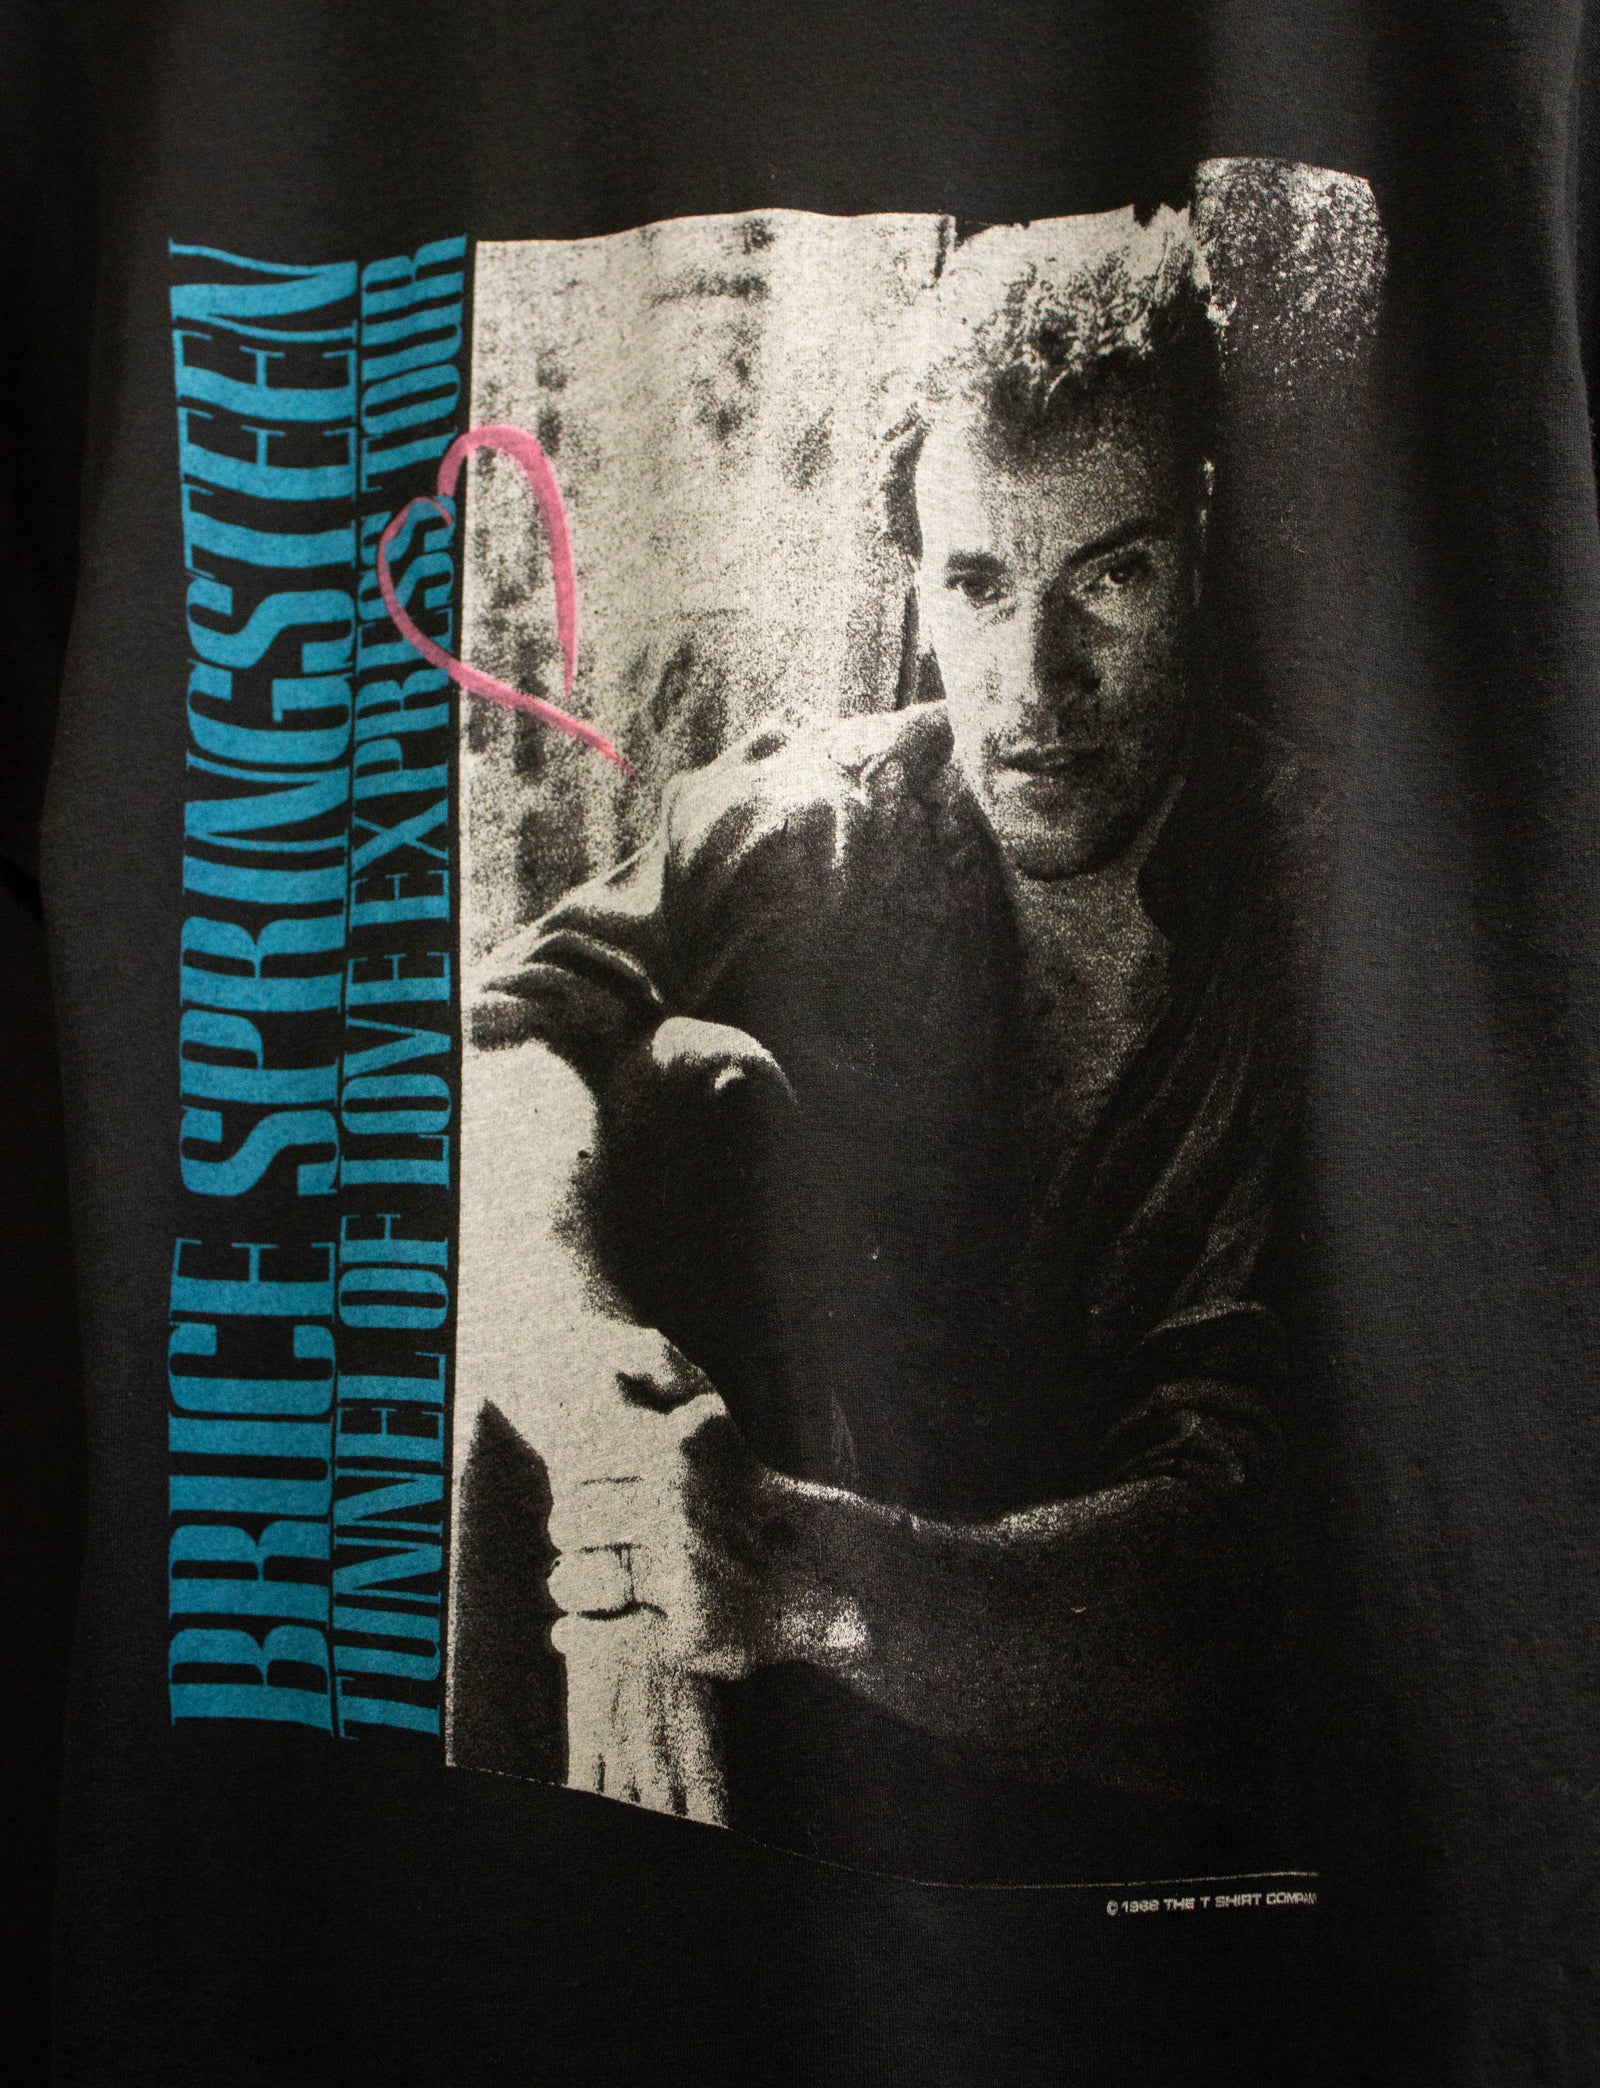 Vintage Bruce Springsteen 1988 Tunnel of Love Express Tour Concert T Black Medium